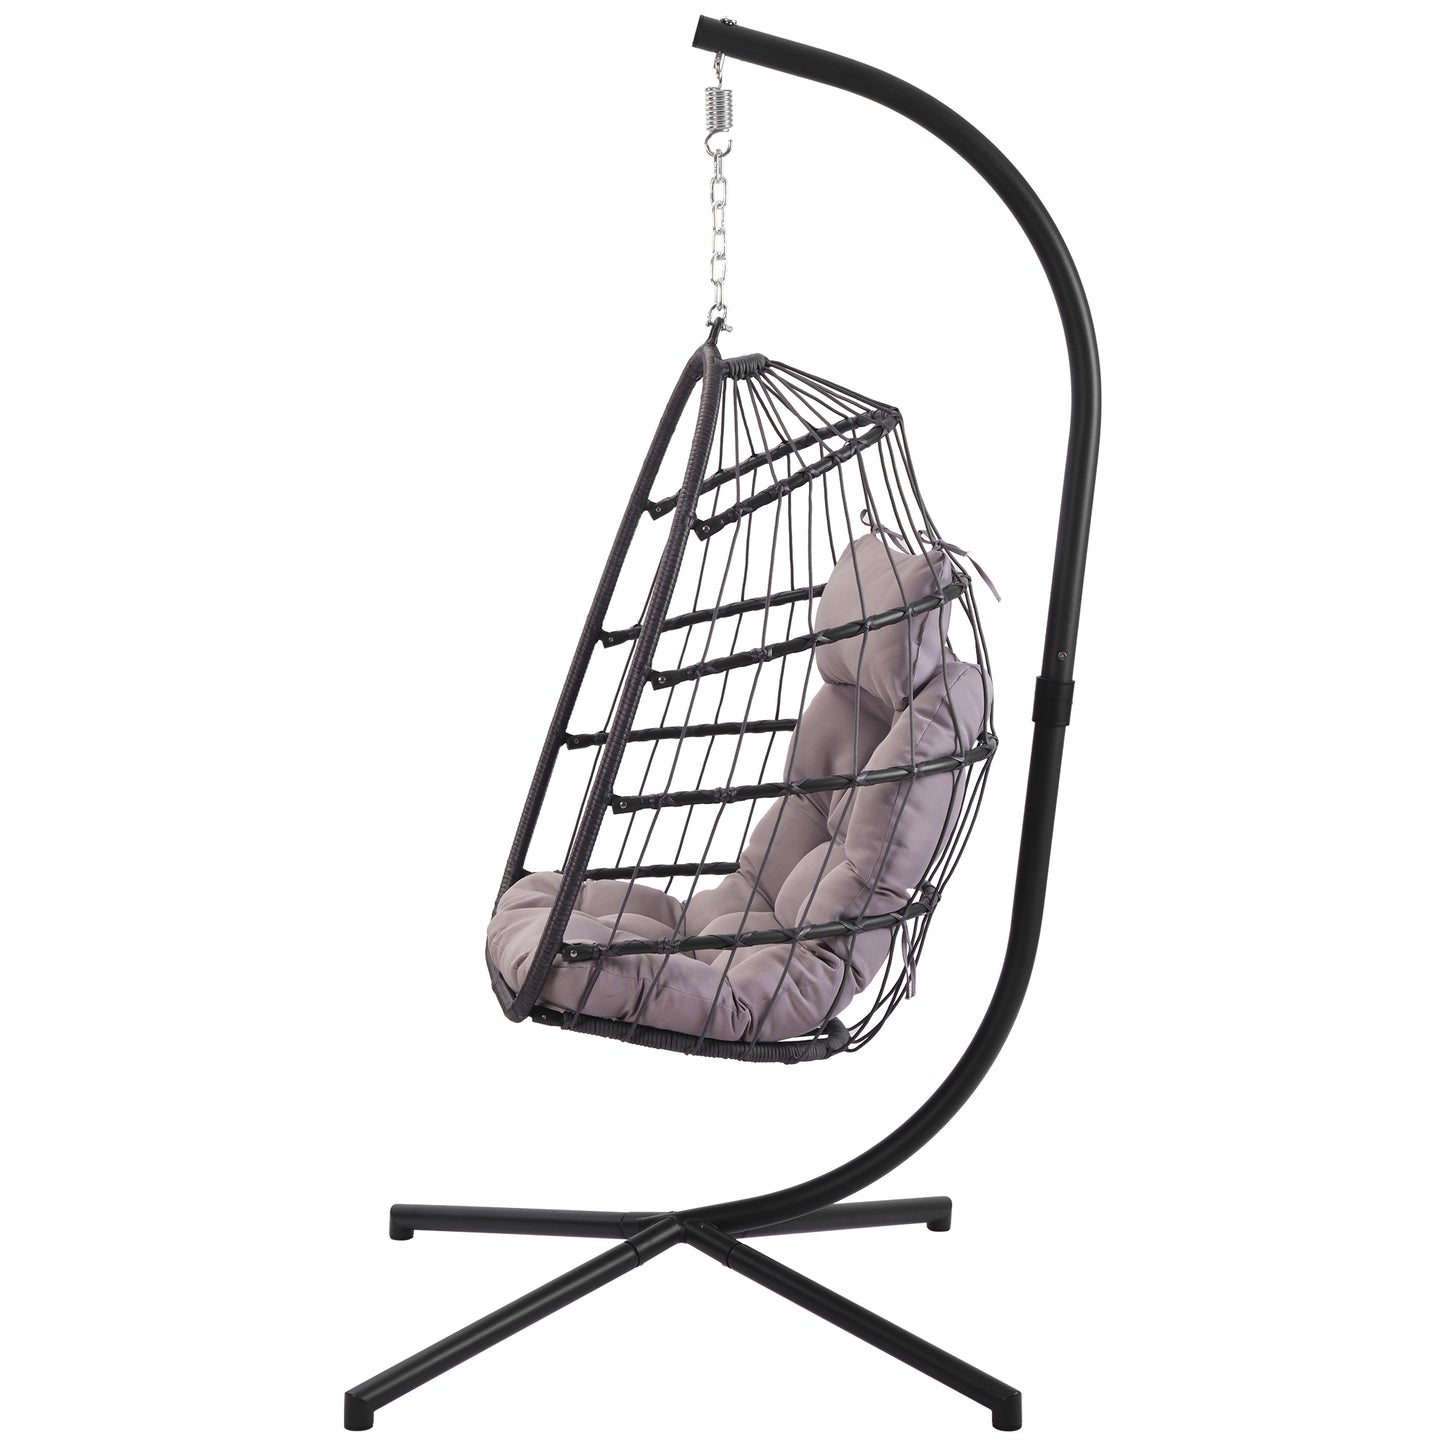 Hammock chair with stand, dark grey cushion, PE wicker rattan, aluminum frame